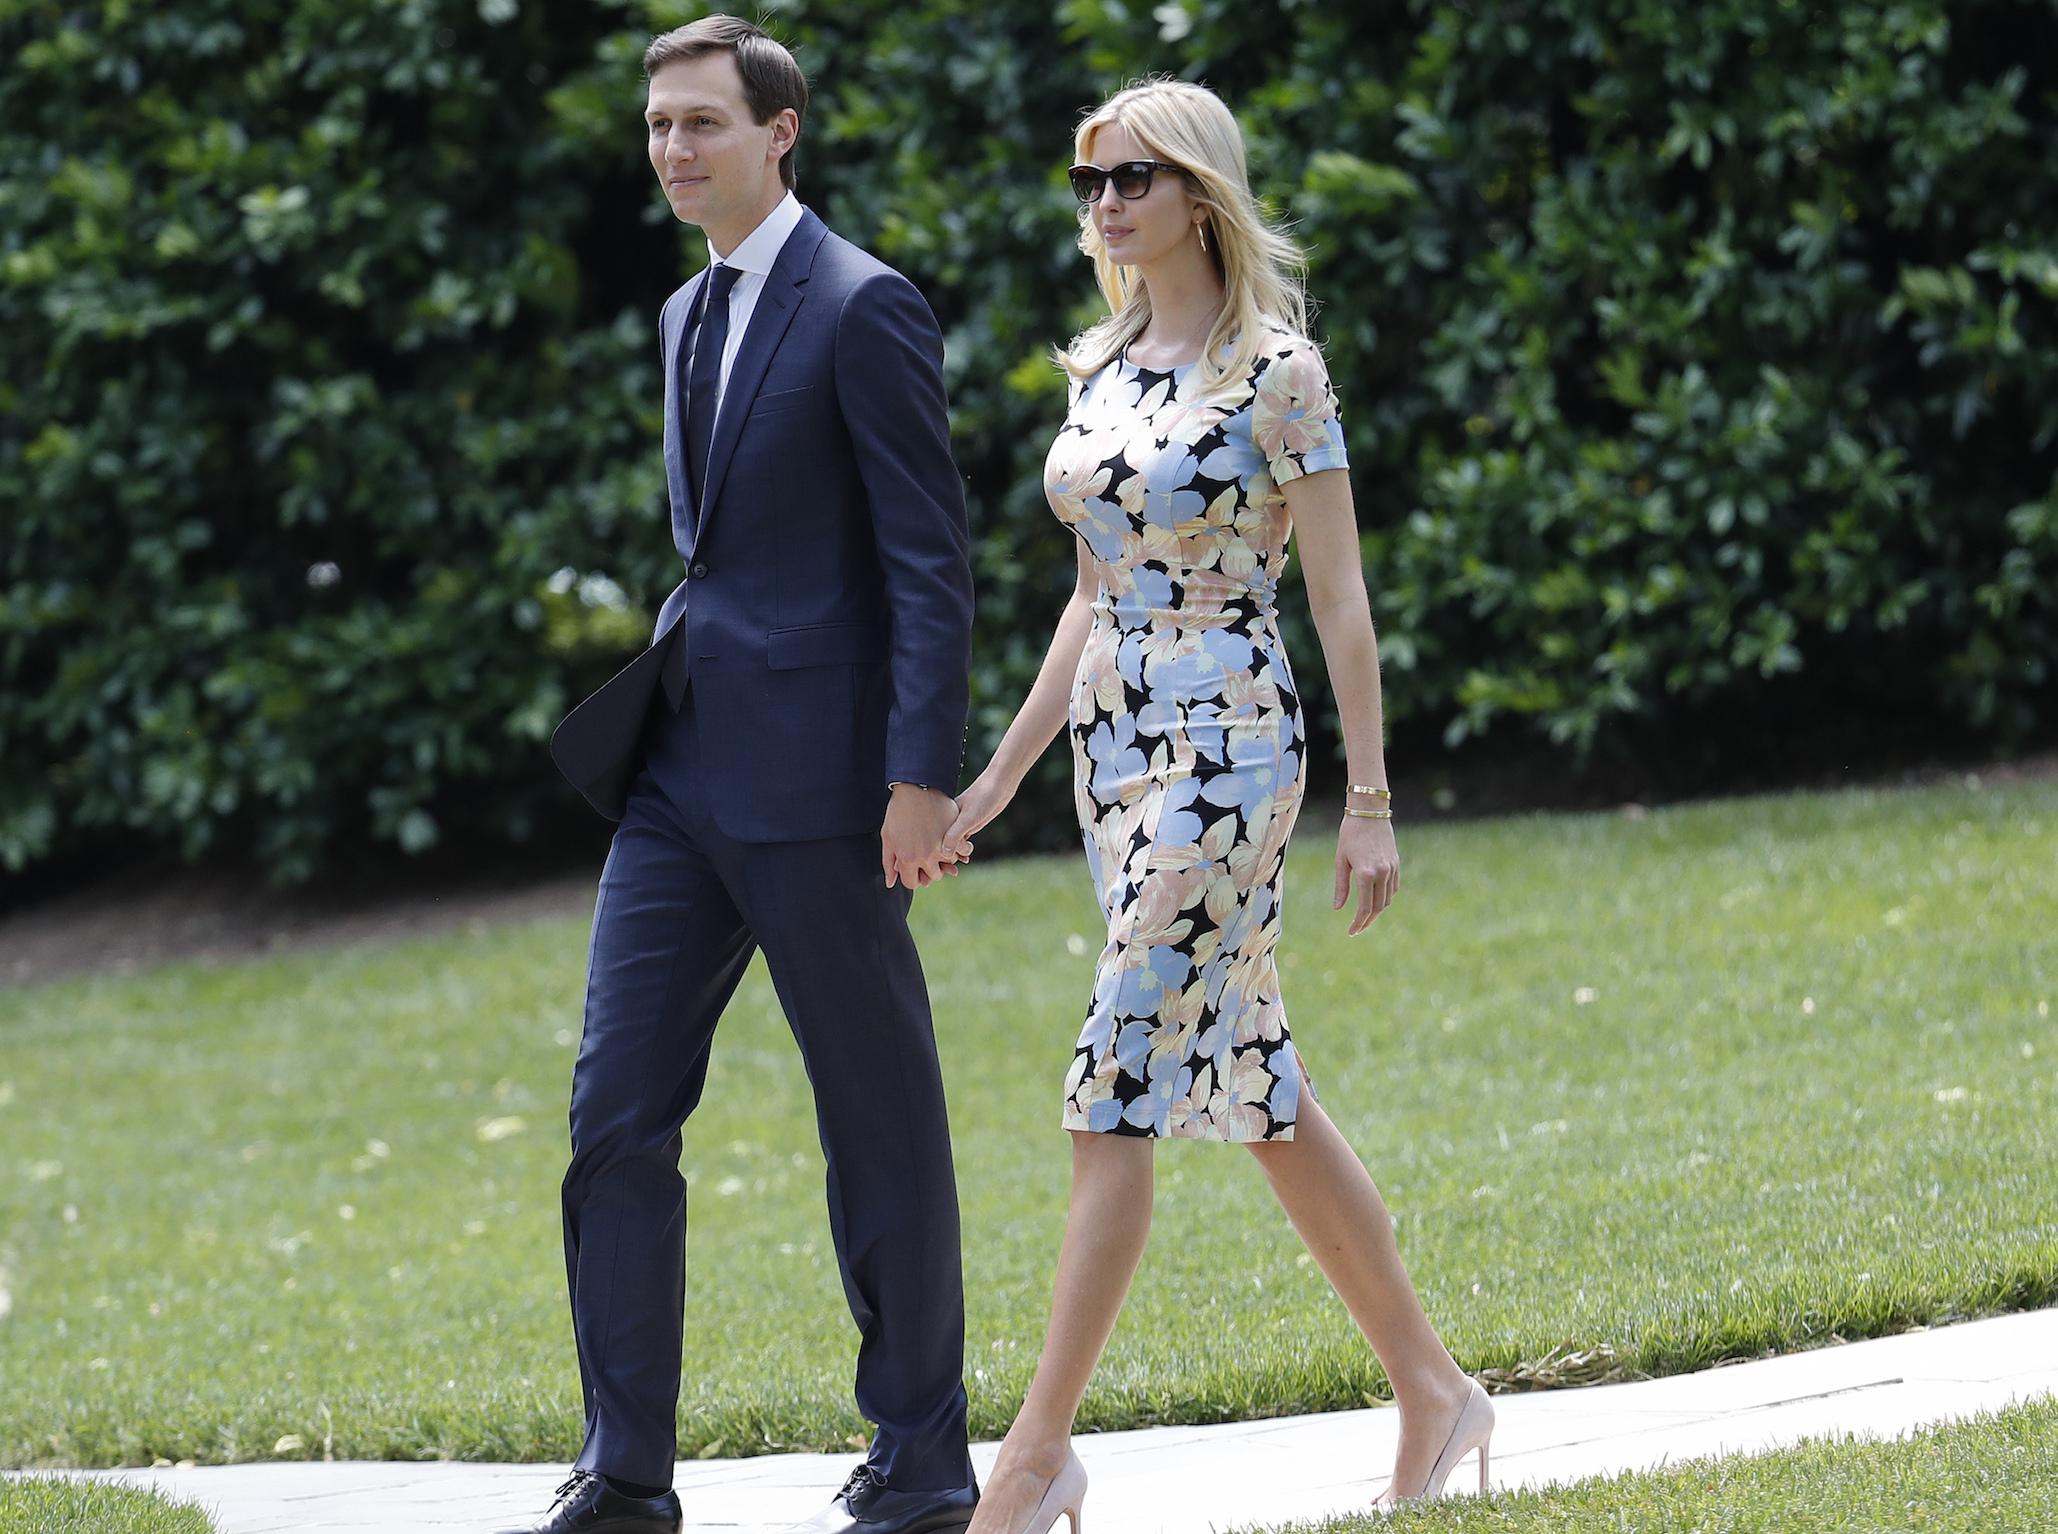 Ivanka Trump, daughter and assistant to President Donald Trump, and her husband White House senior adviser Jared Kushner